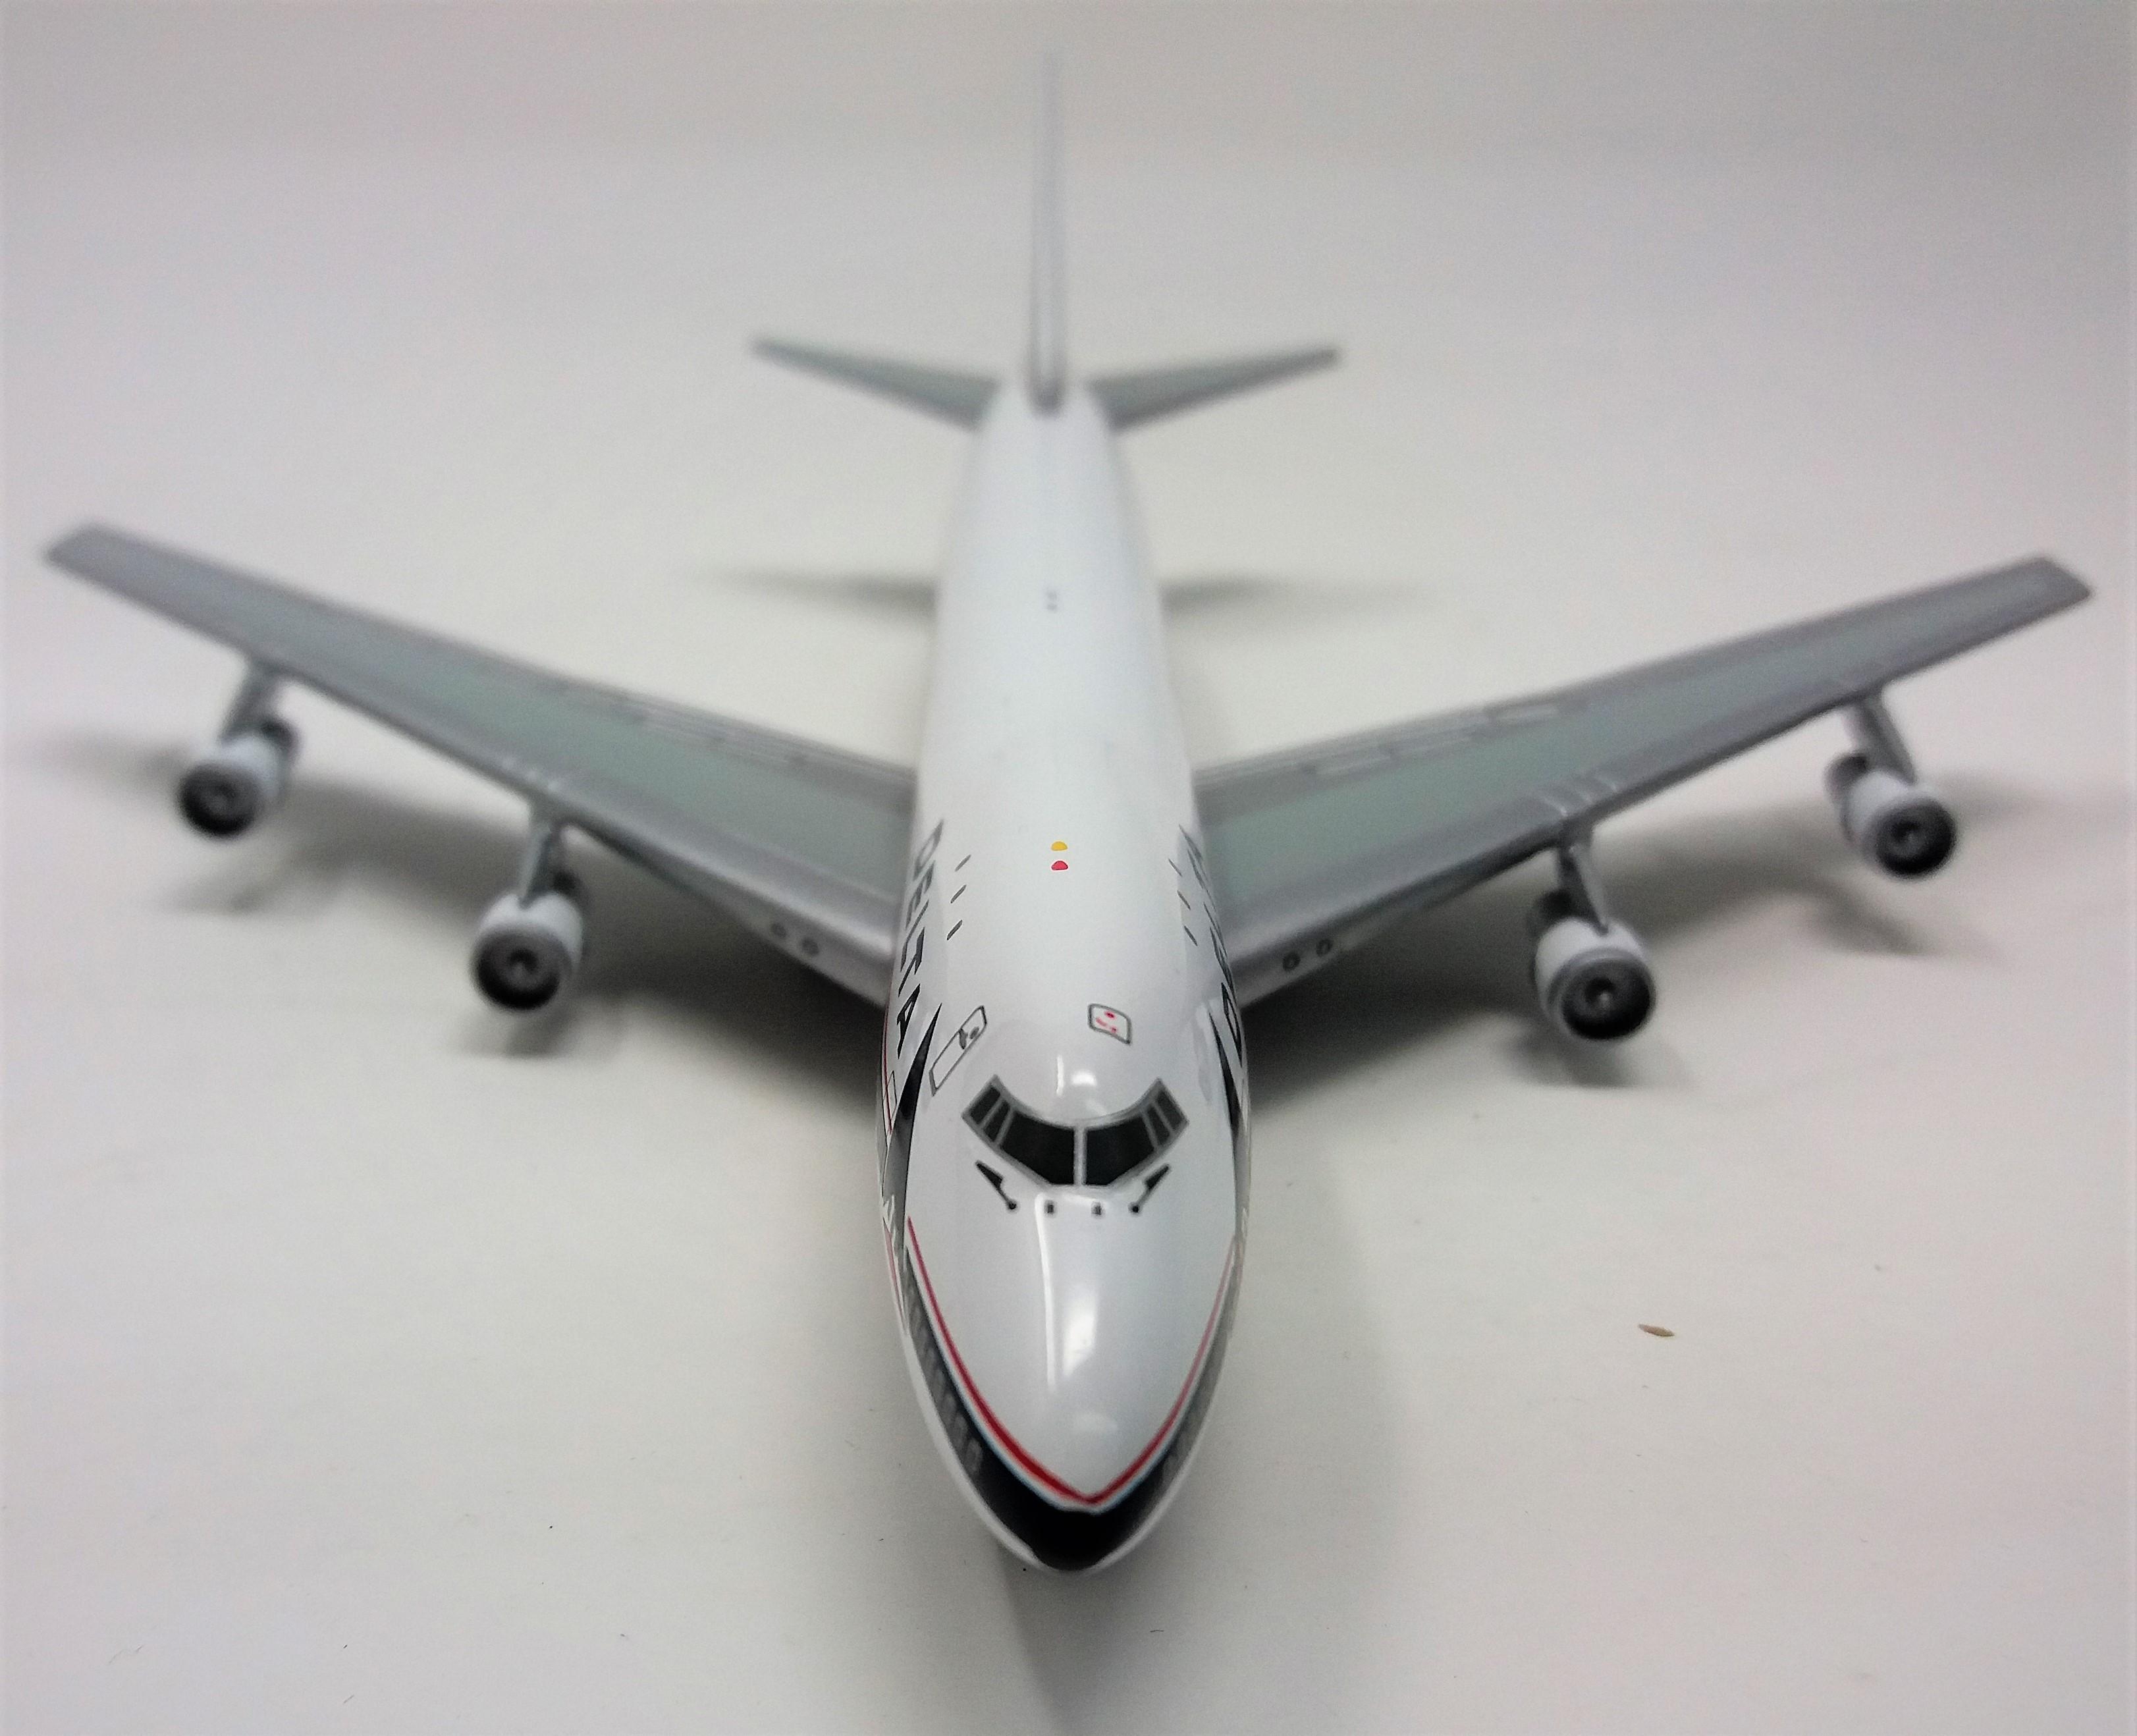 Gemini Jets Diecast 1:400 Scale Delta Airlines Boeing 747 Jet